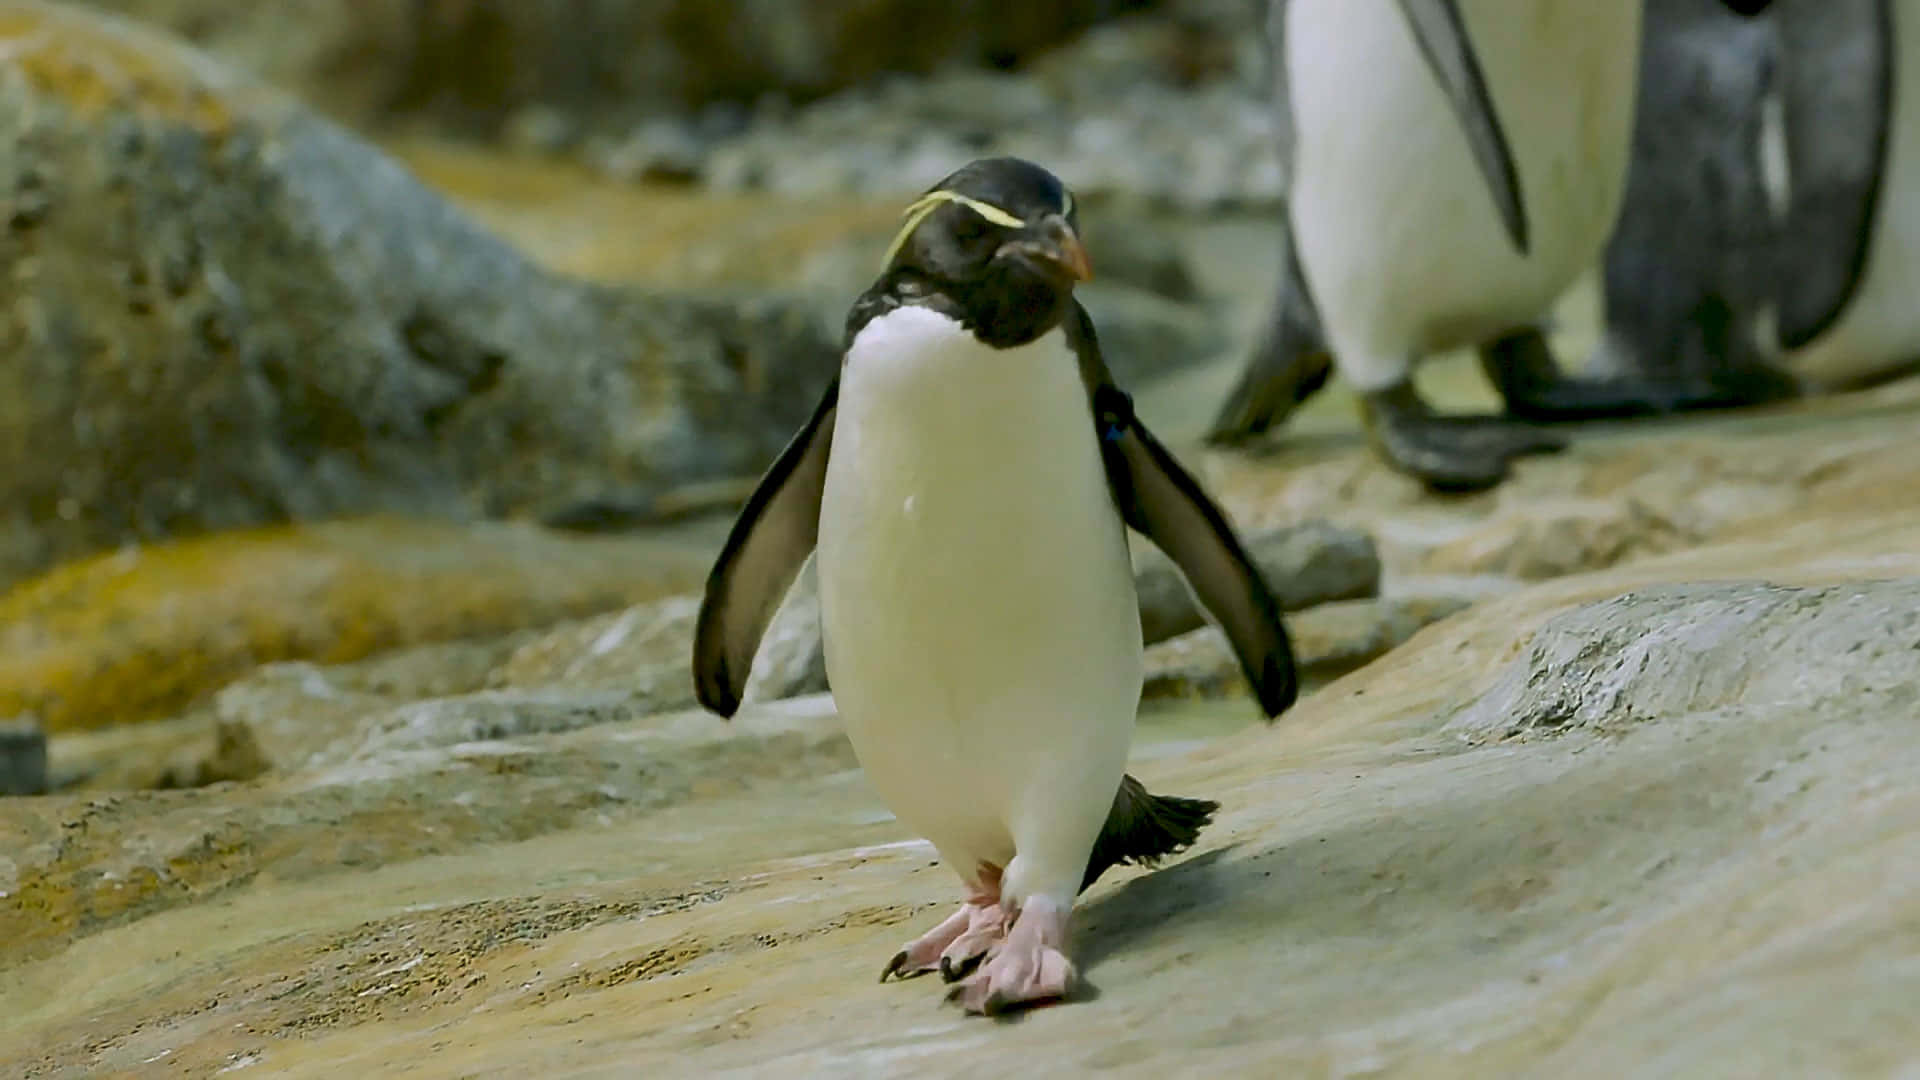 Penguins Walking On Rocks In An Enclosure Wallpaper